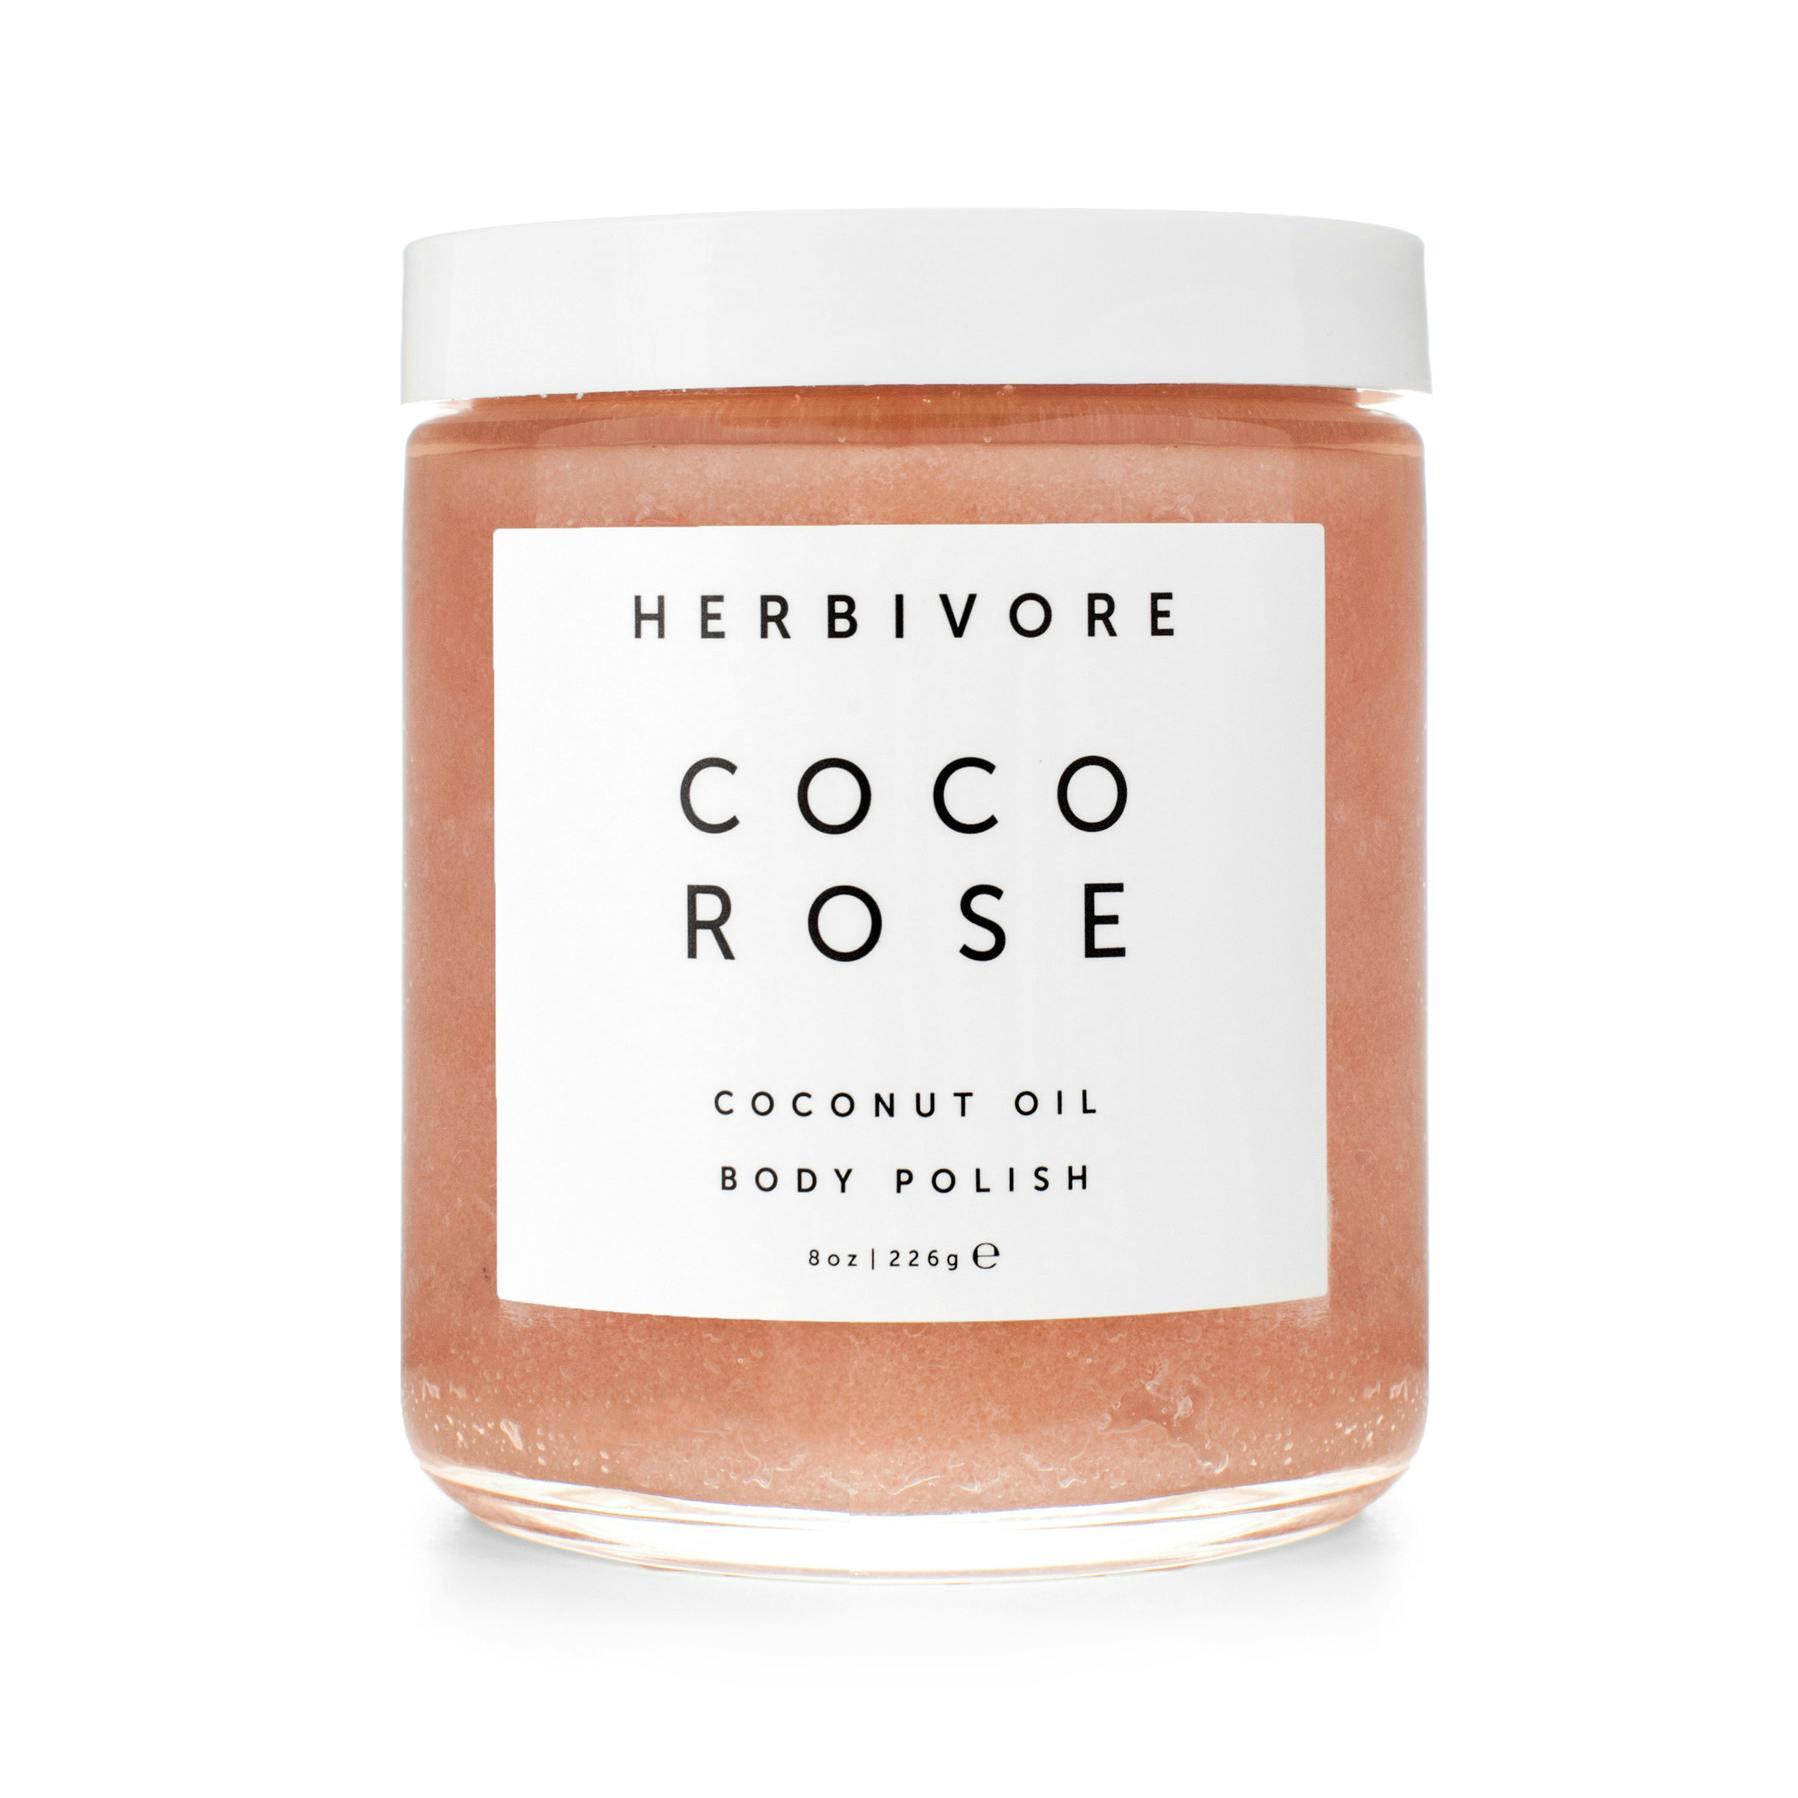 Herbivore Coco Rose Body Polish (8oz)